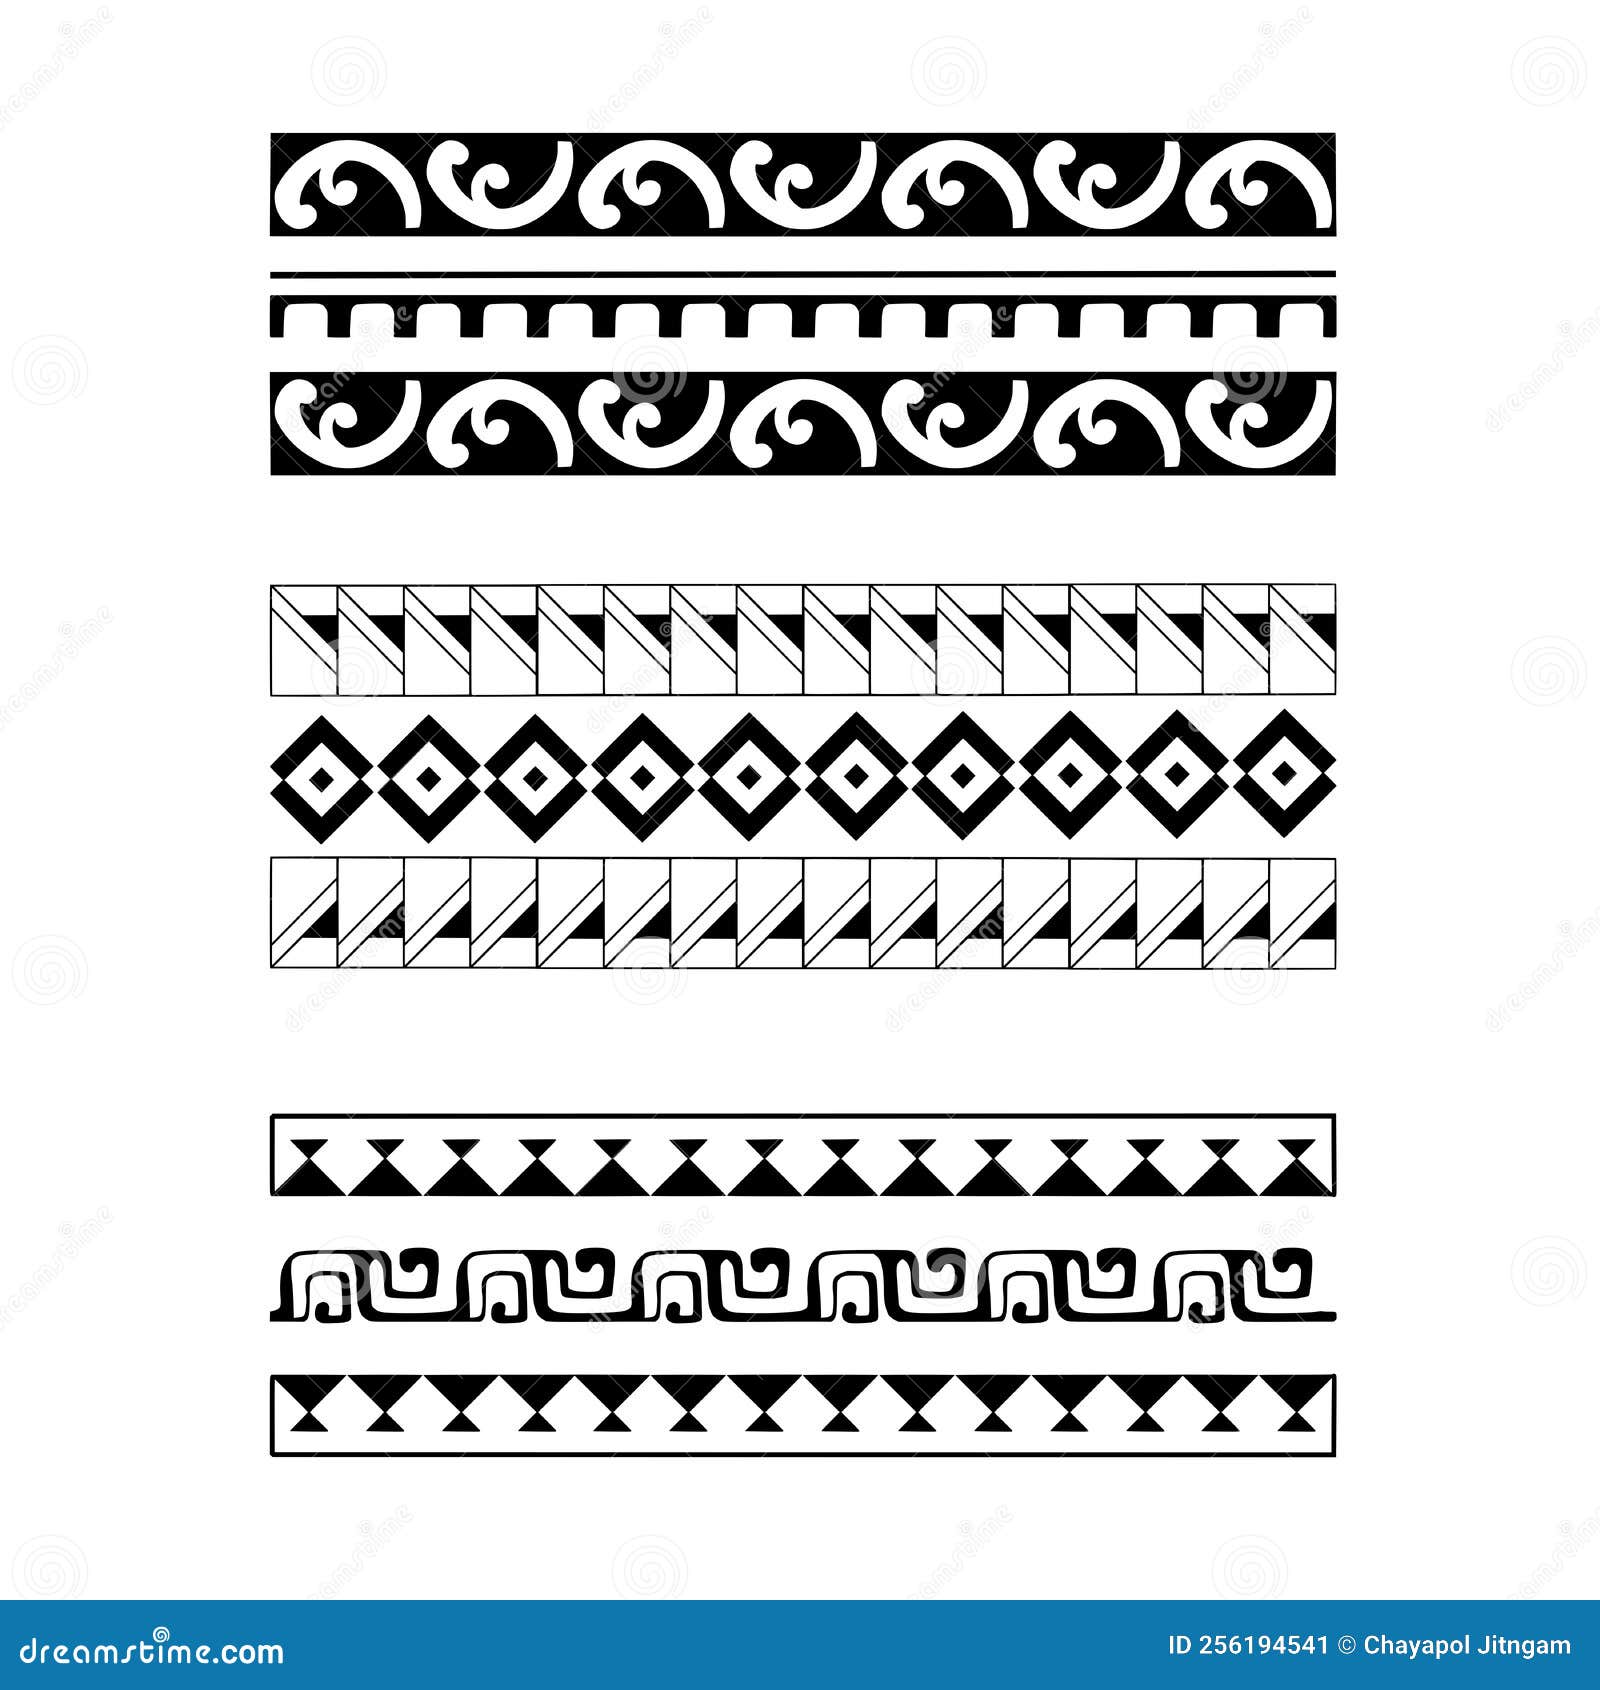 Polynesian Armband Tattoo Stencil. Pattern Samoan. Black and White Texture Stock Vector - Illustration of geometric, element: 256194541